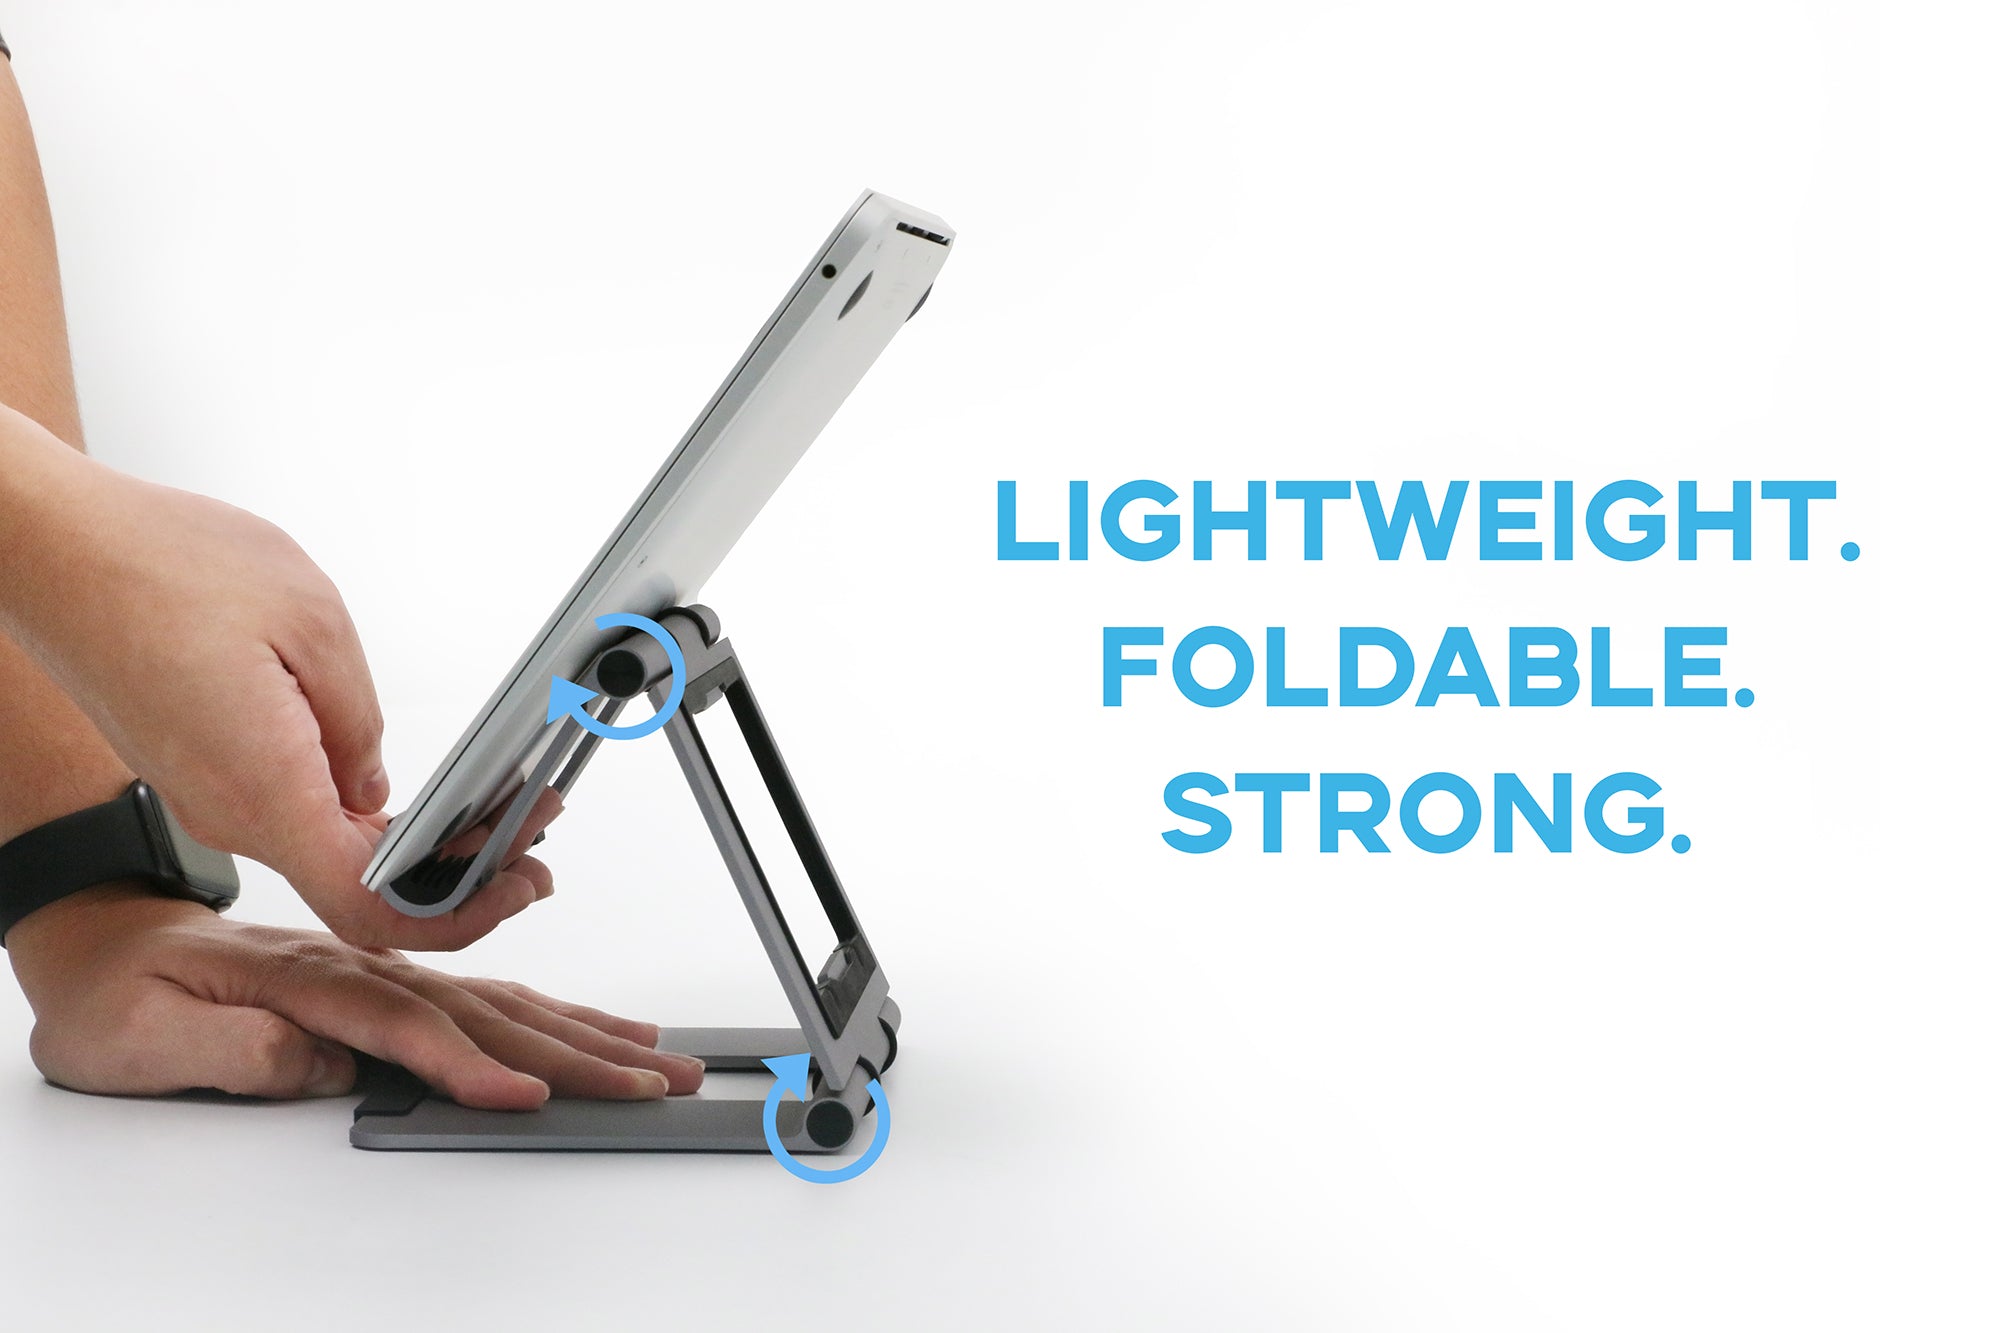 lightweight, foldable sturdy laptop stand rmour ridgestand